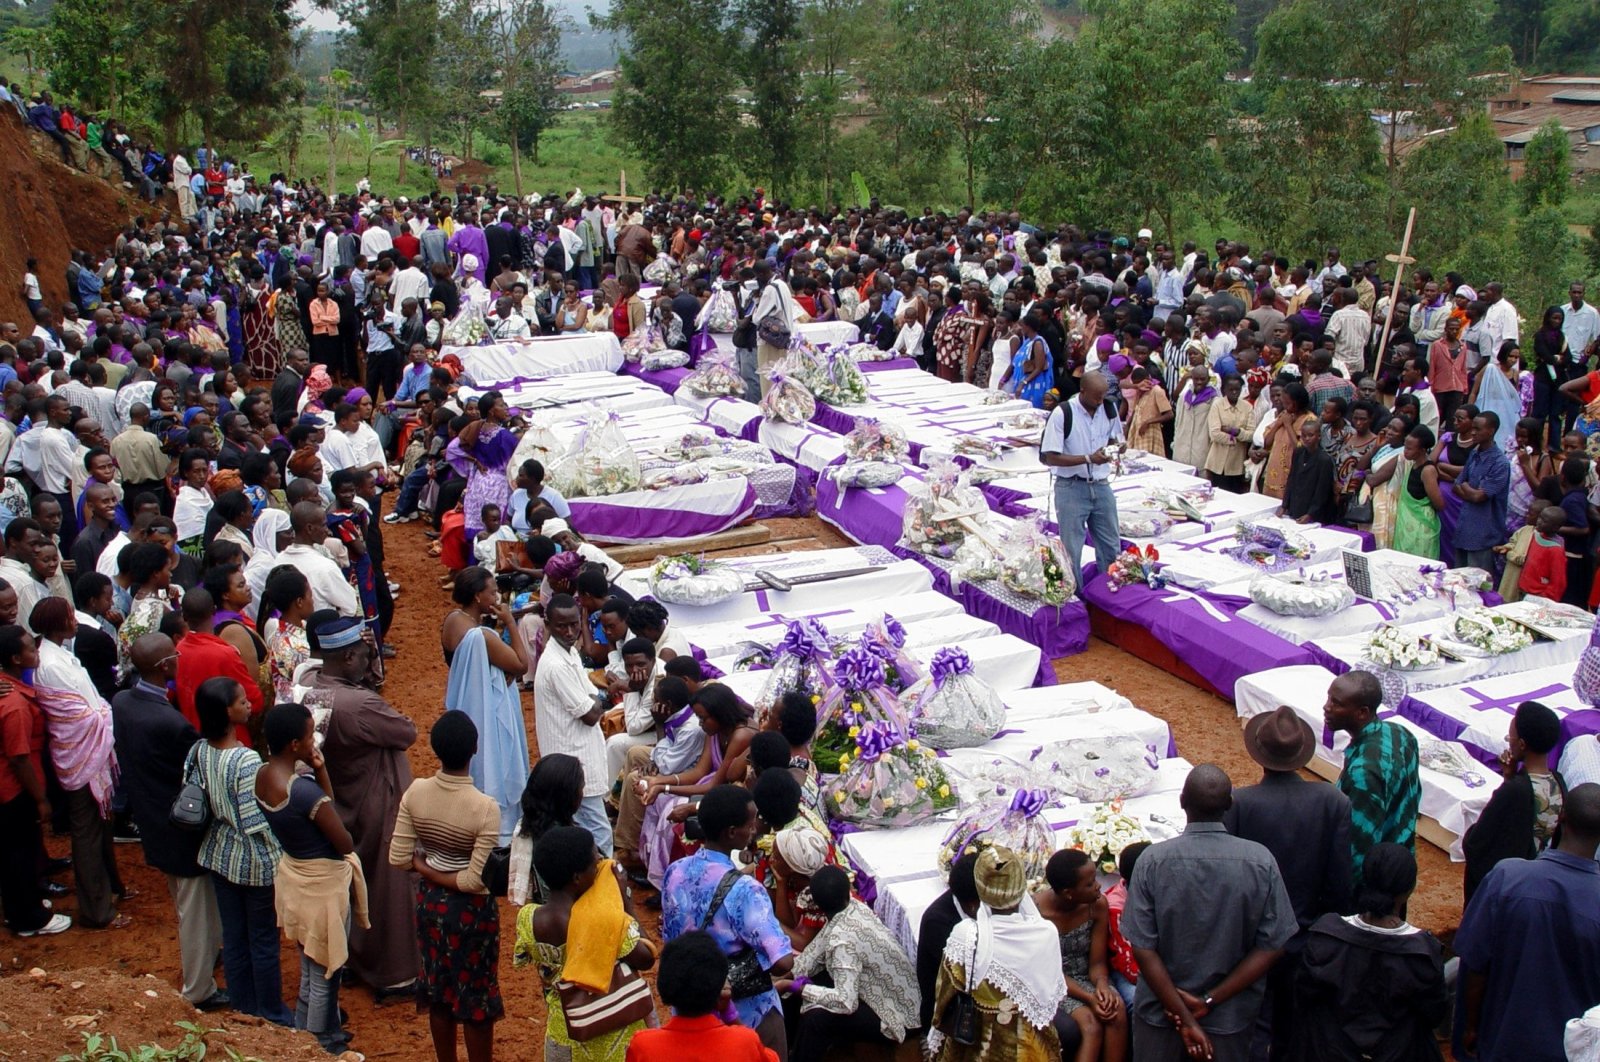 Rwanda's genocide leader lives among survivors